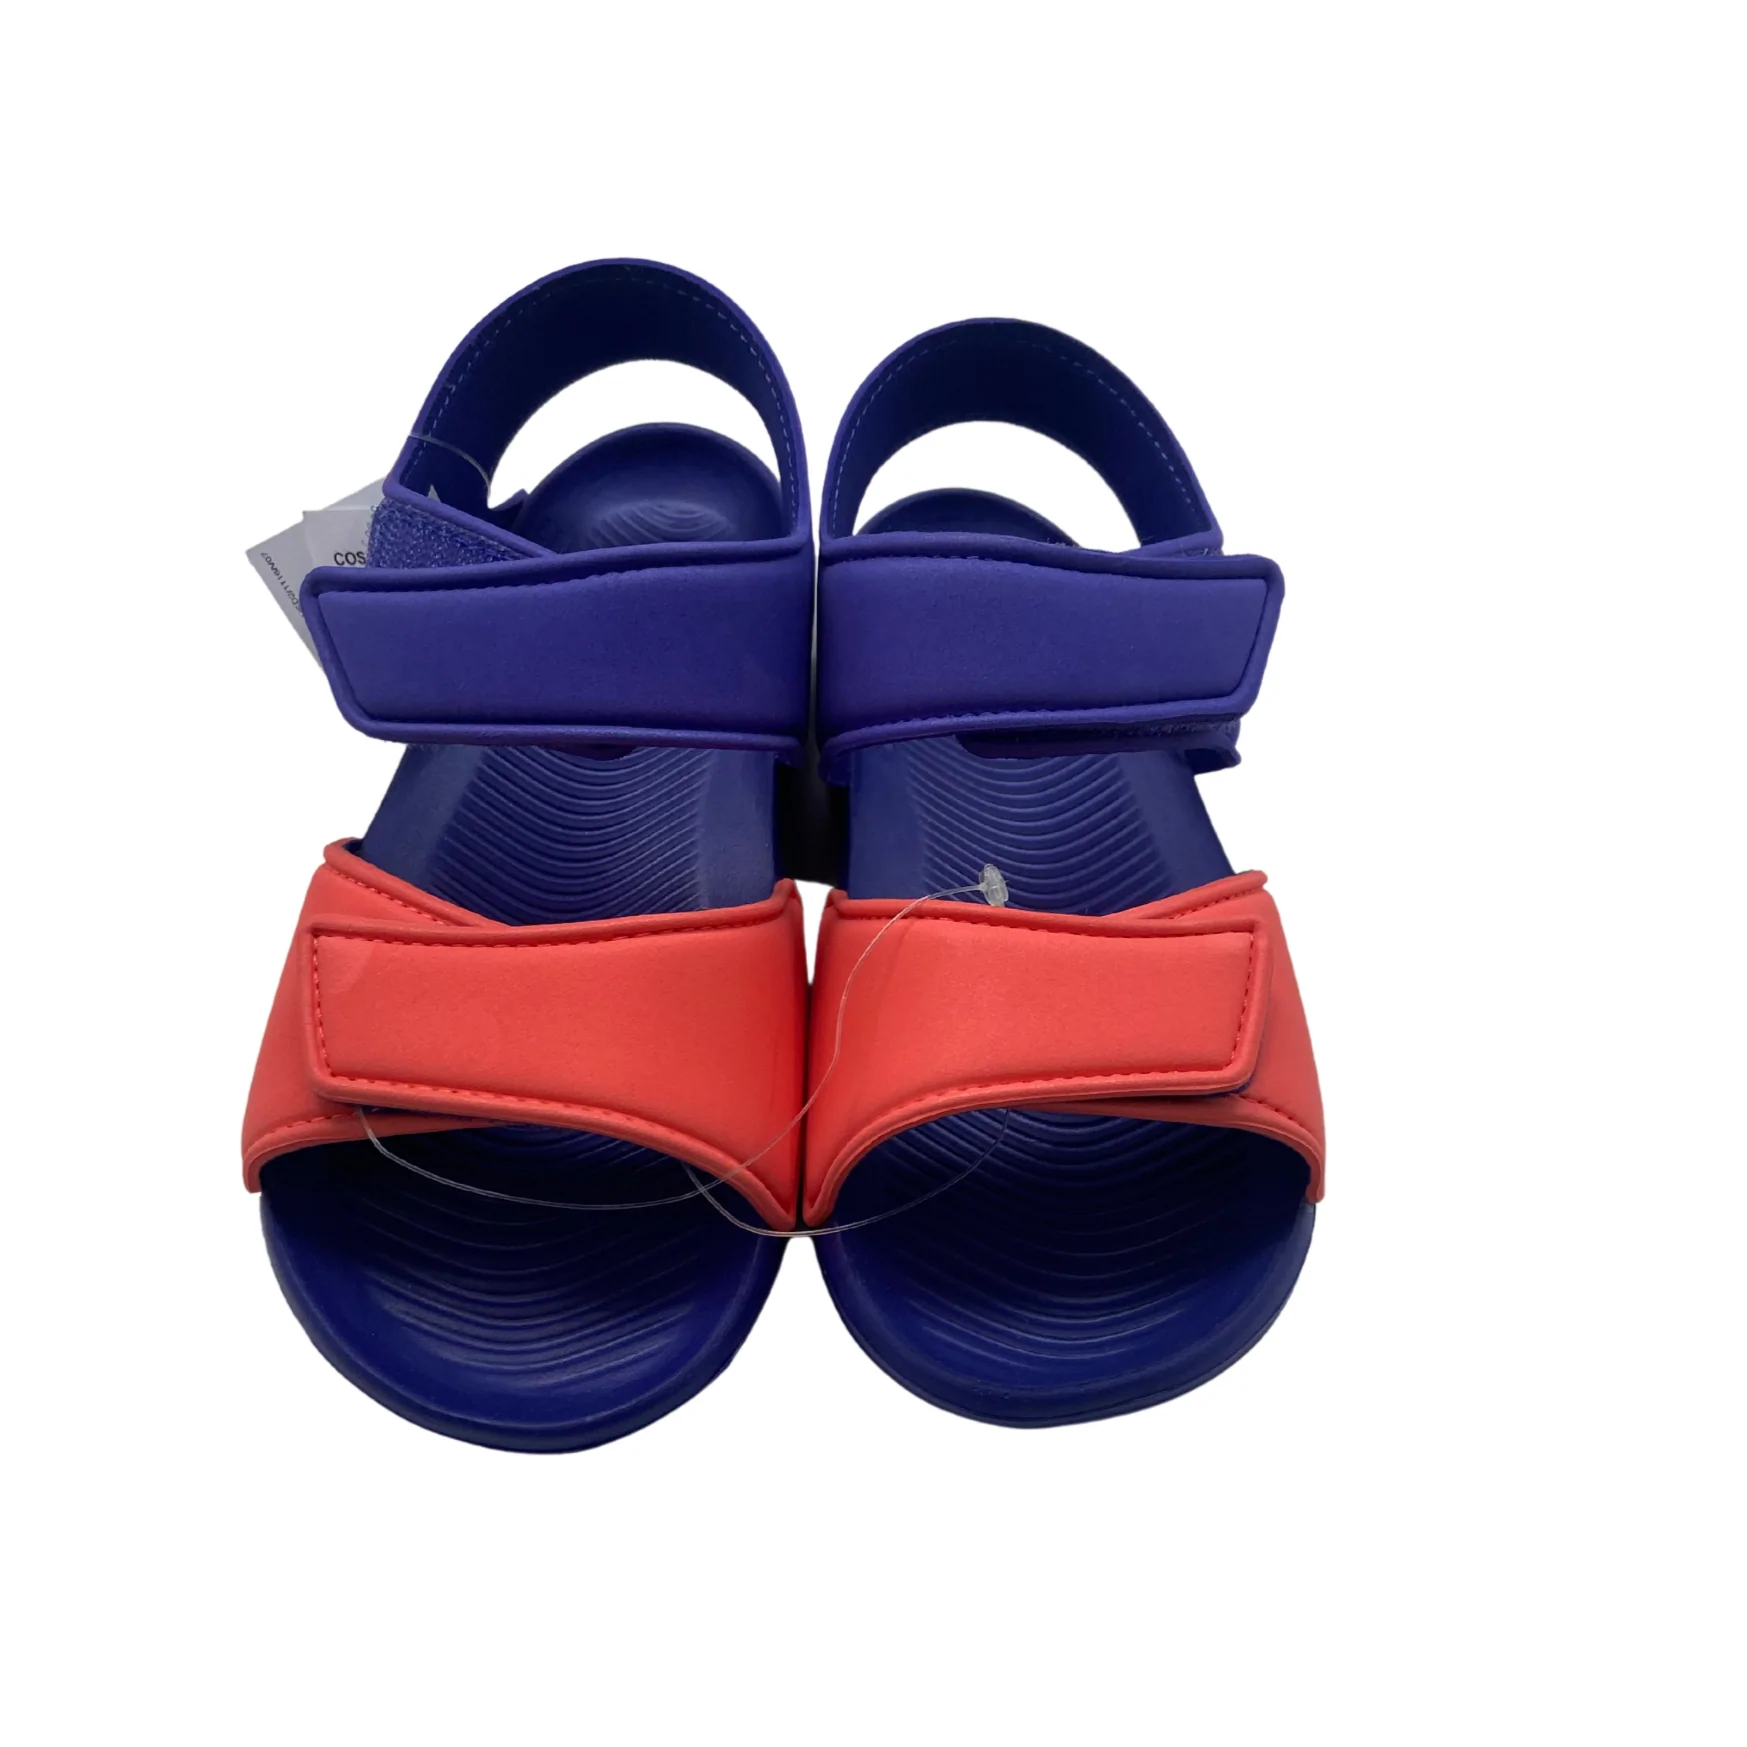 Adidas Kids Sandals / AltaSwim C / Purple and Coral / Various Sizes